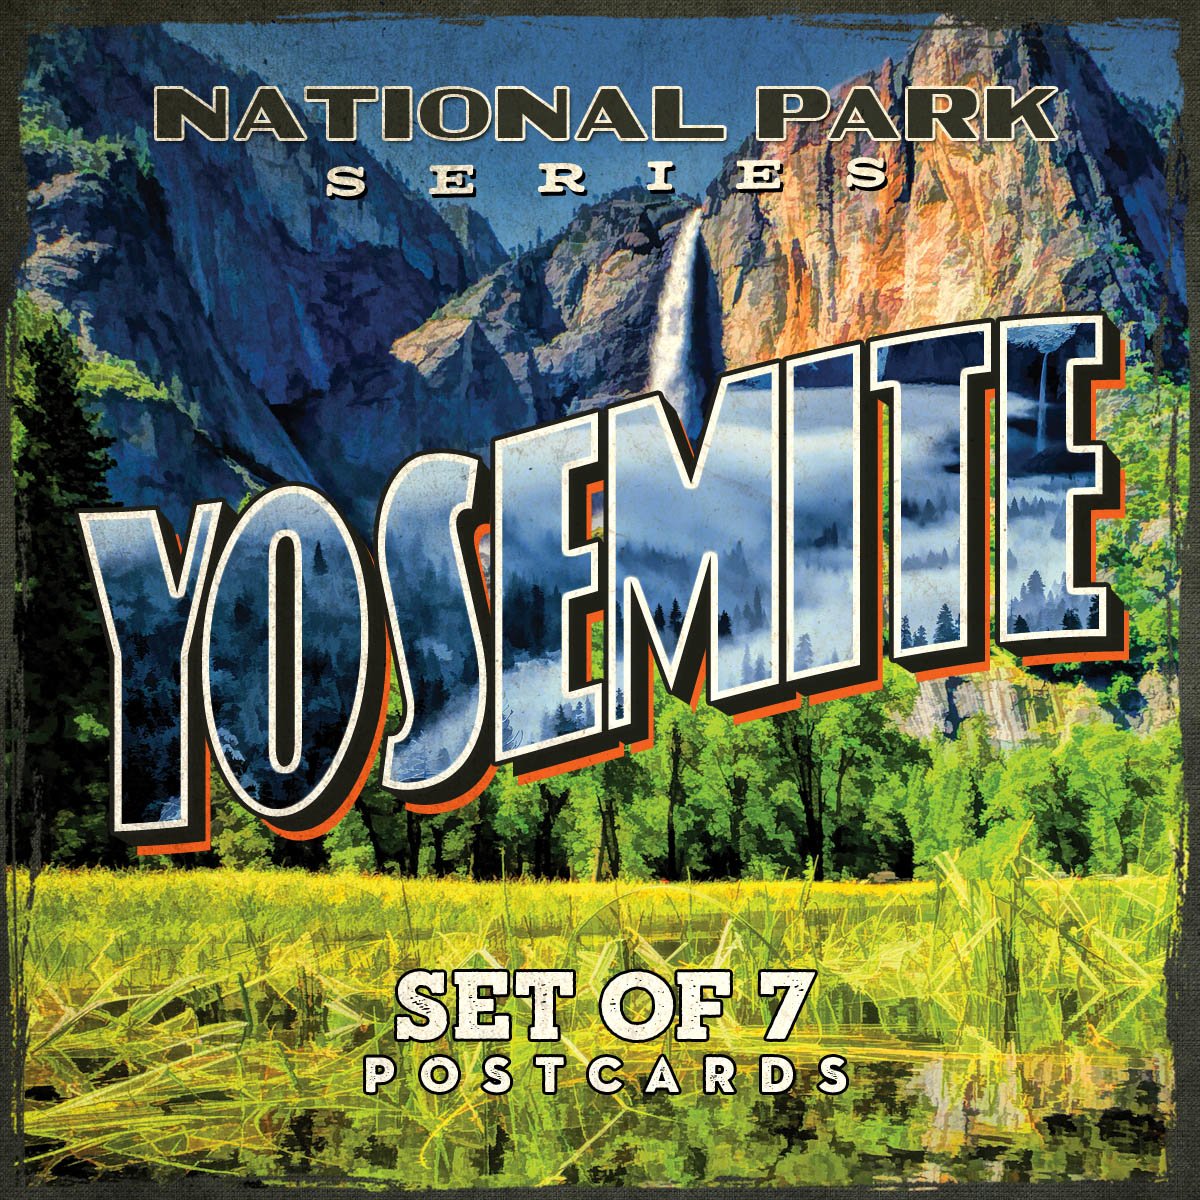 Yosemite National Park Postcards | Set of 7